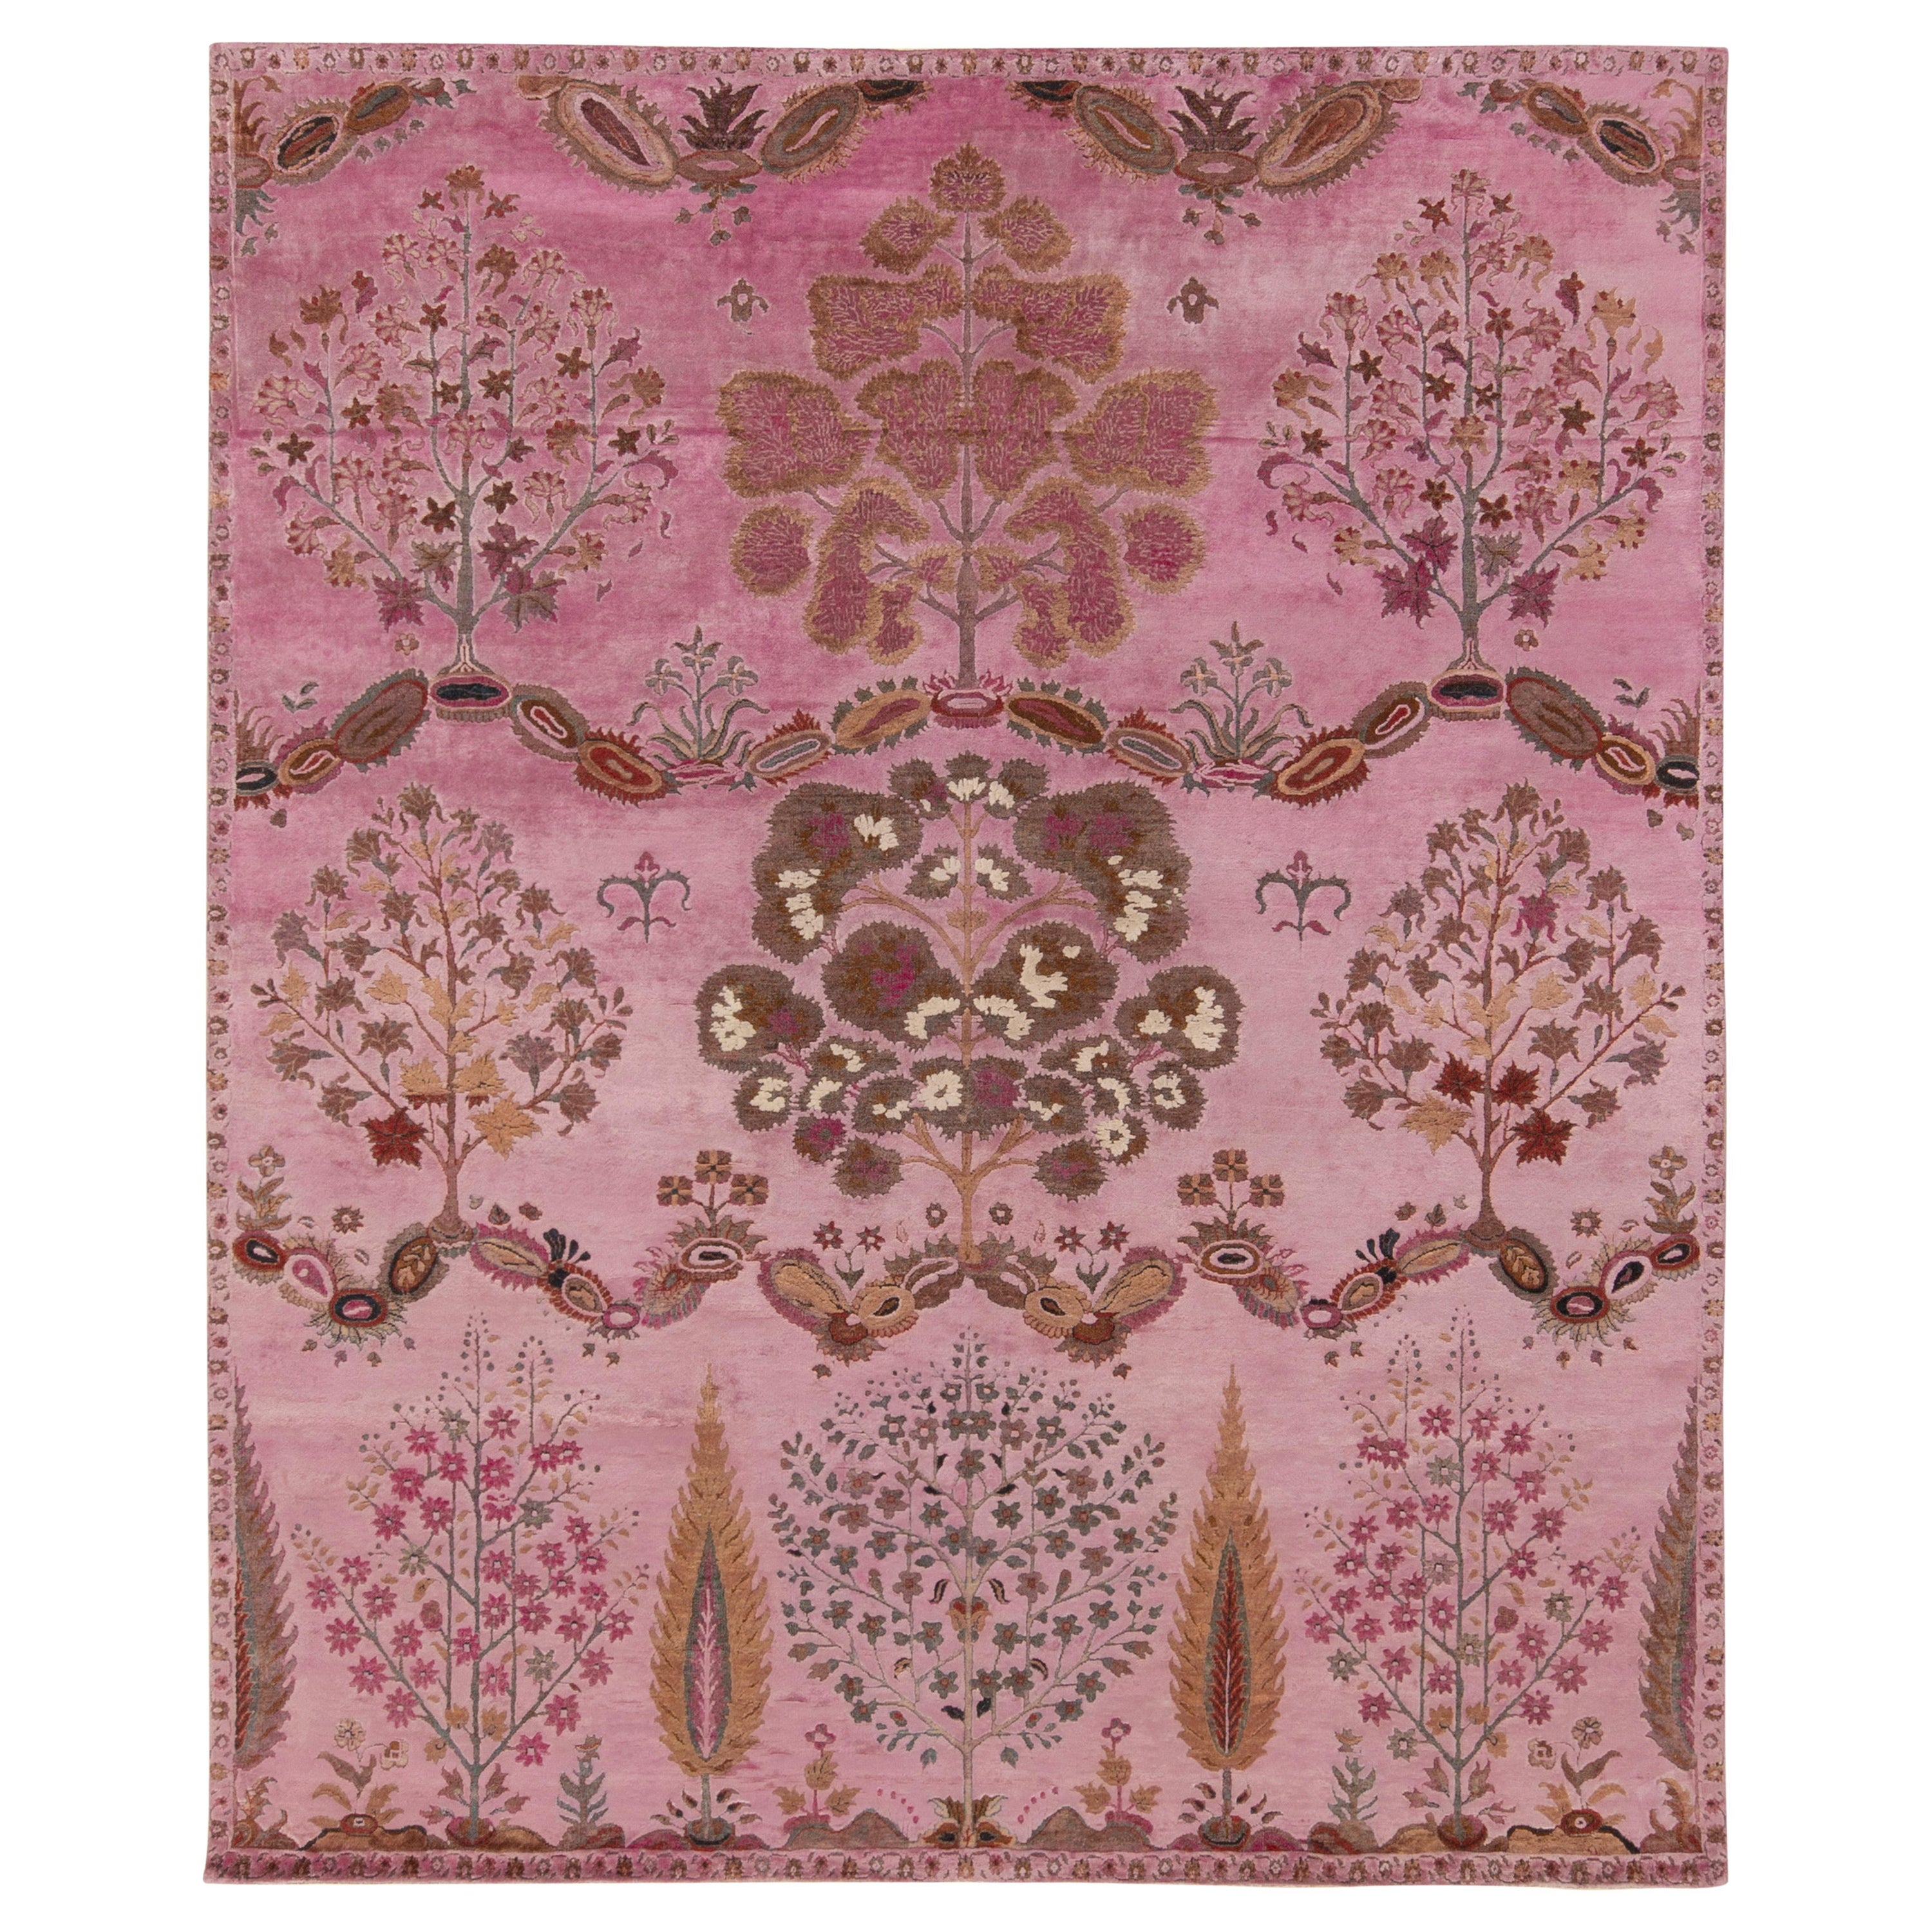 Rug & Kilim’s Classic Style Rug in Pink & Beige-Brown Floral Pattern